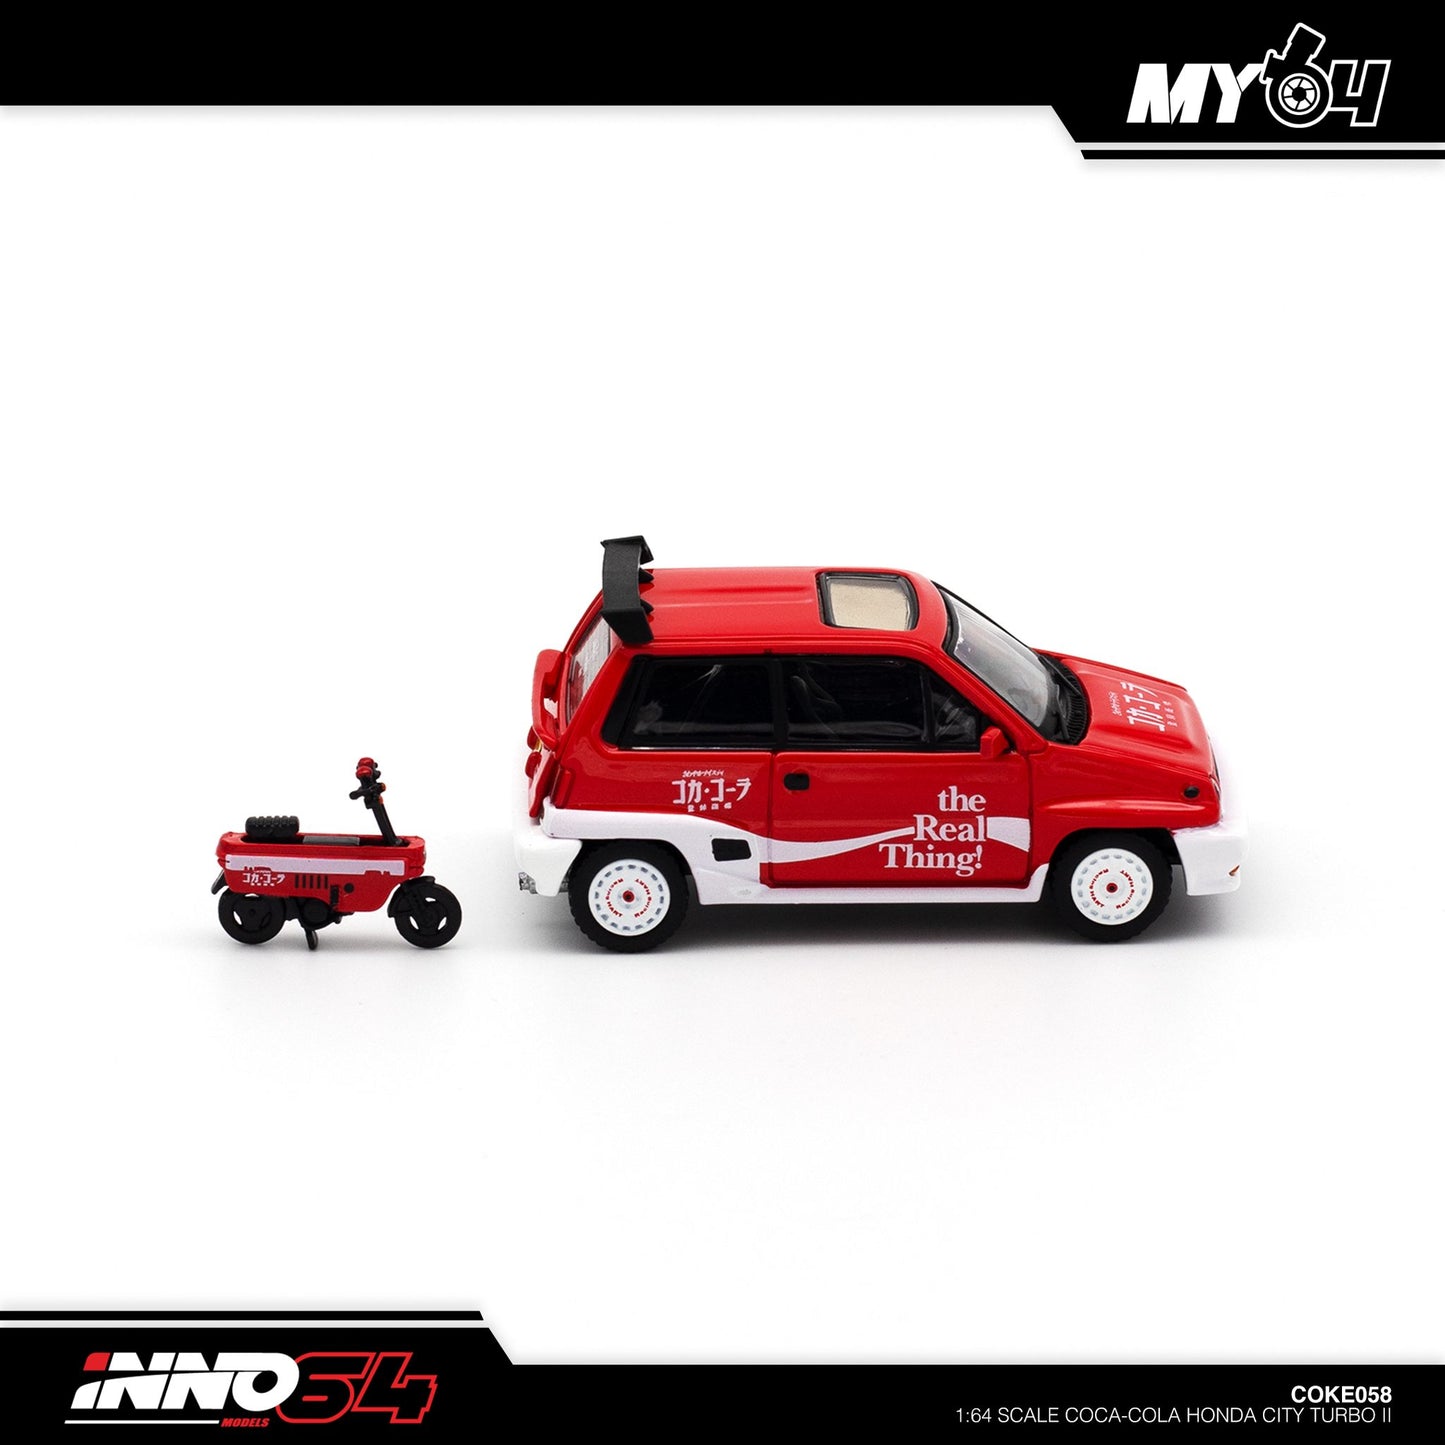 [INNO64] Honda City Turbo II "Coca-Cola" Livery With Motocompo